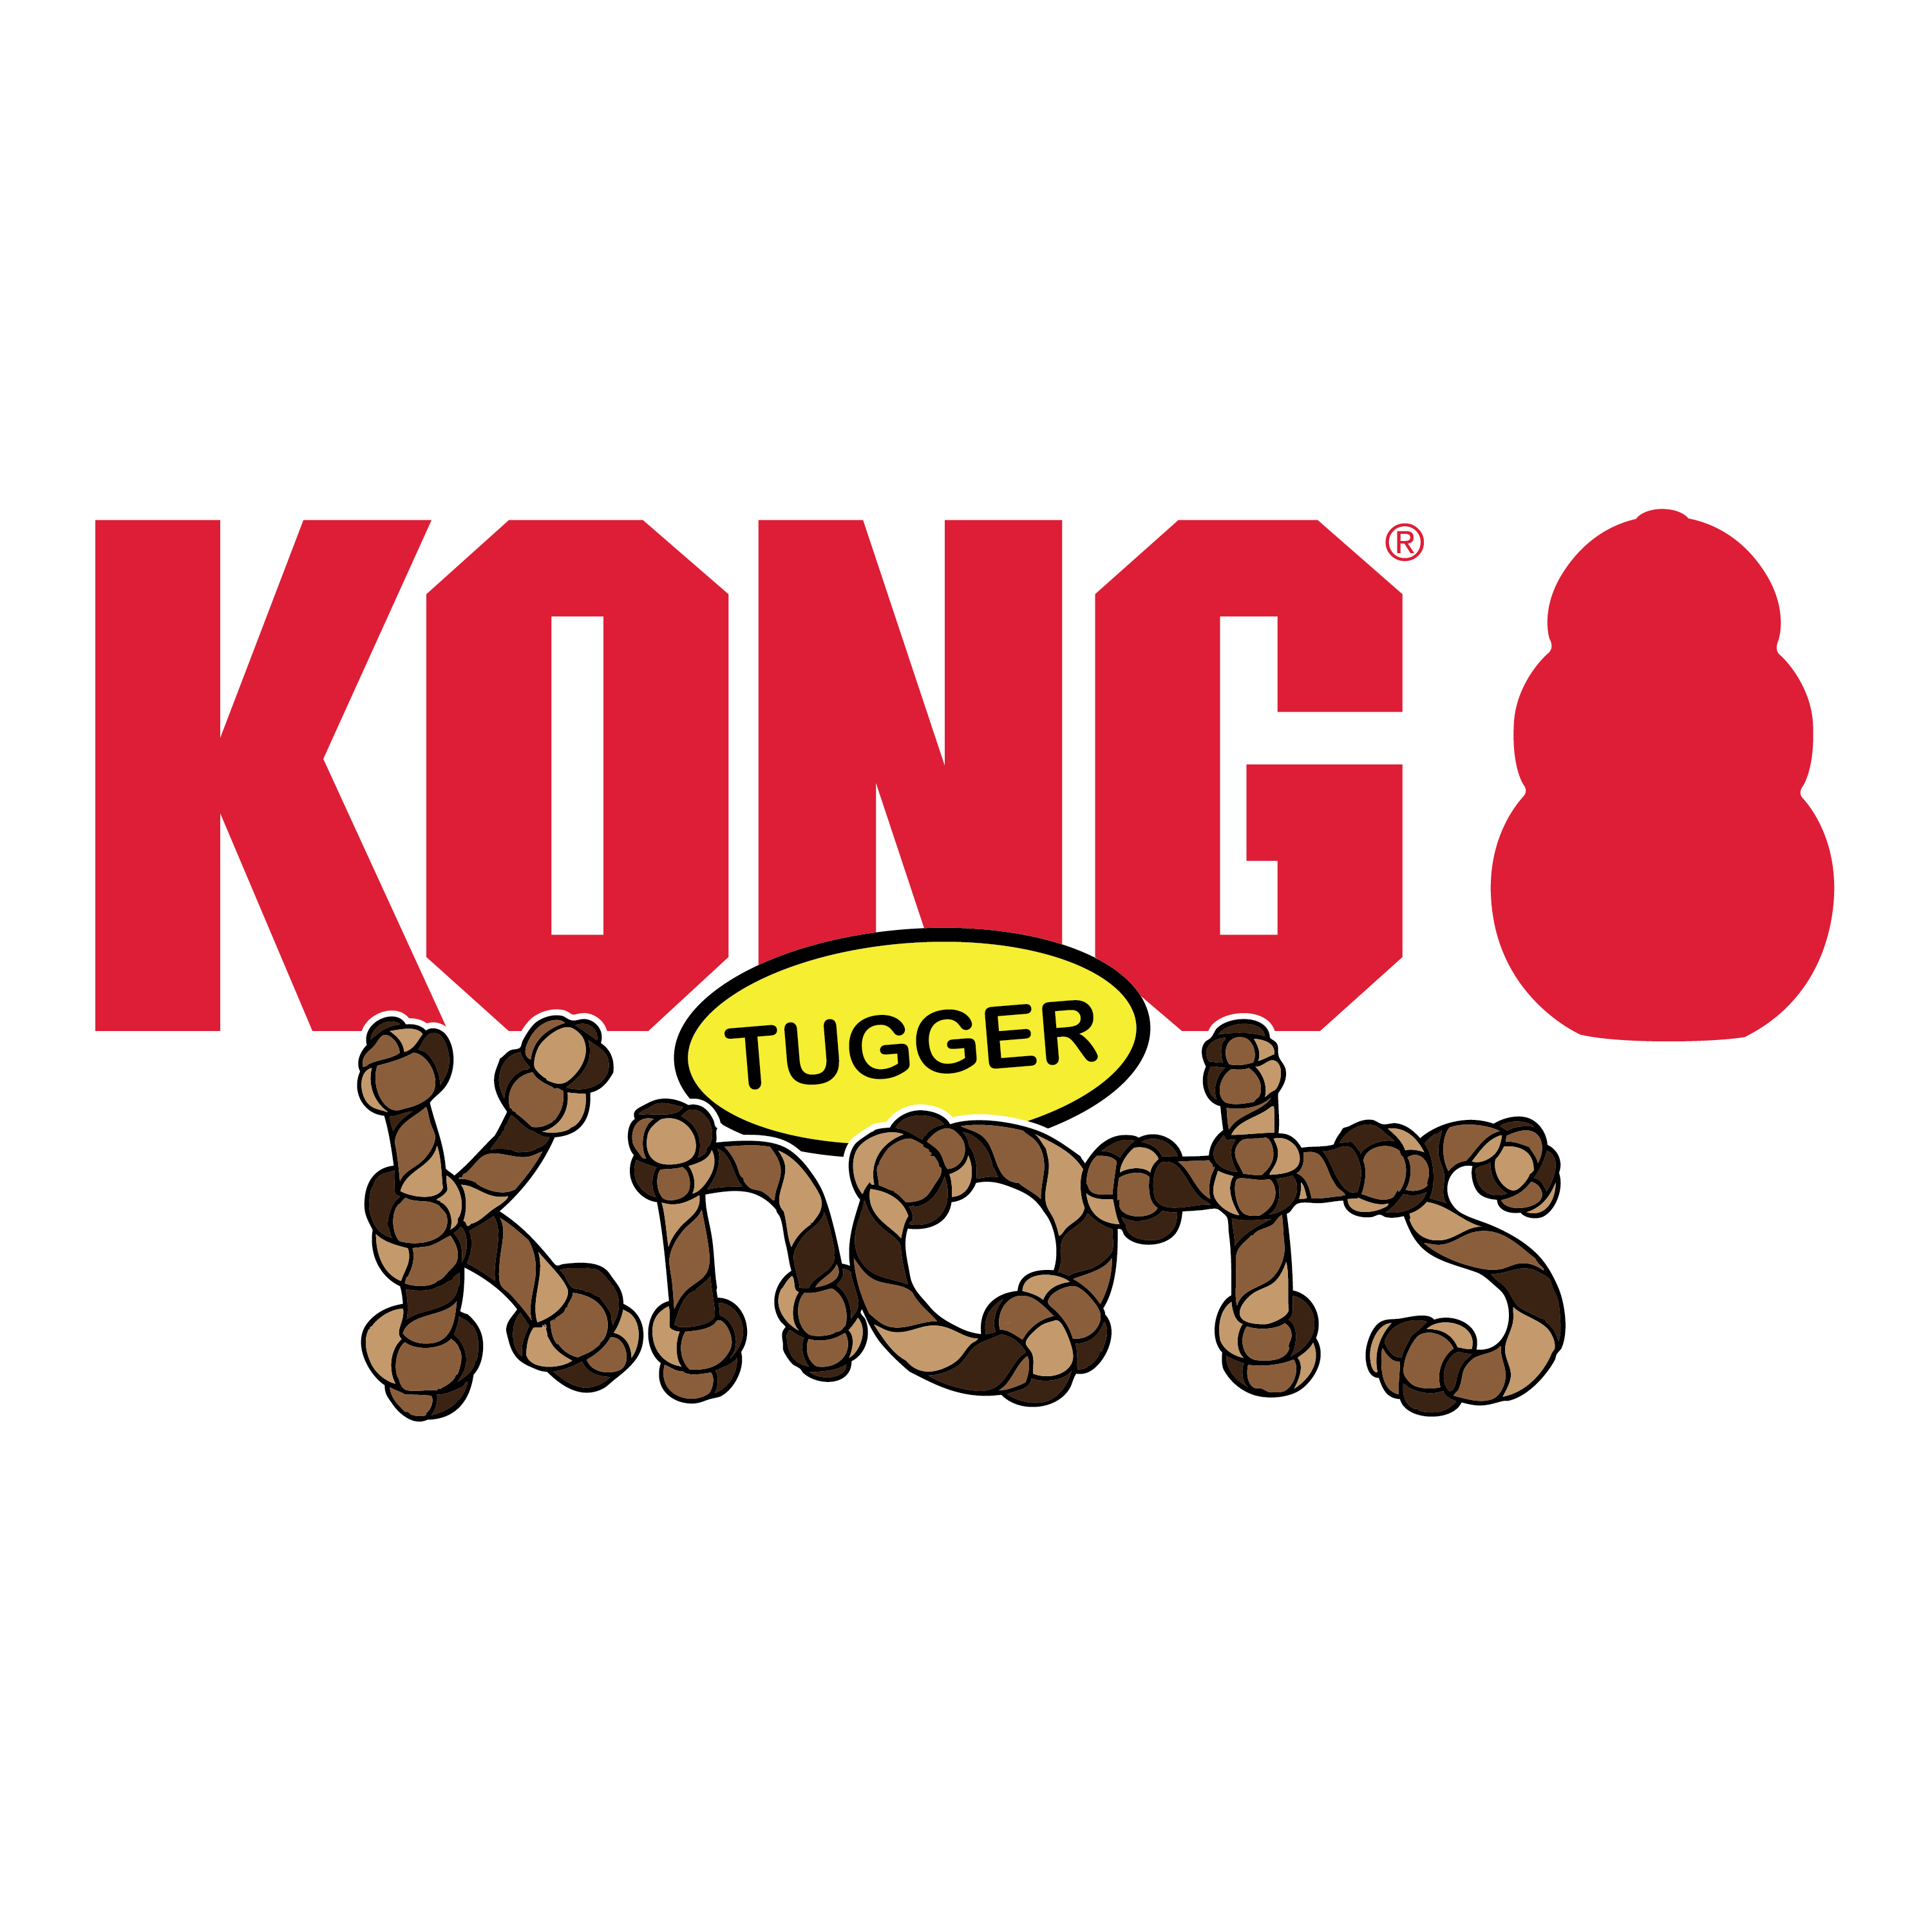 Tugger Knots Frog alt1 imagem do produto